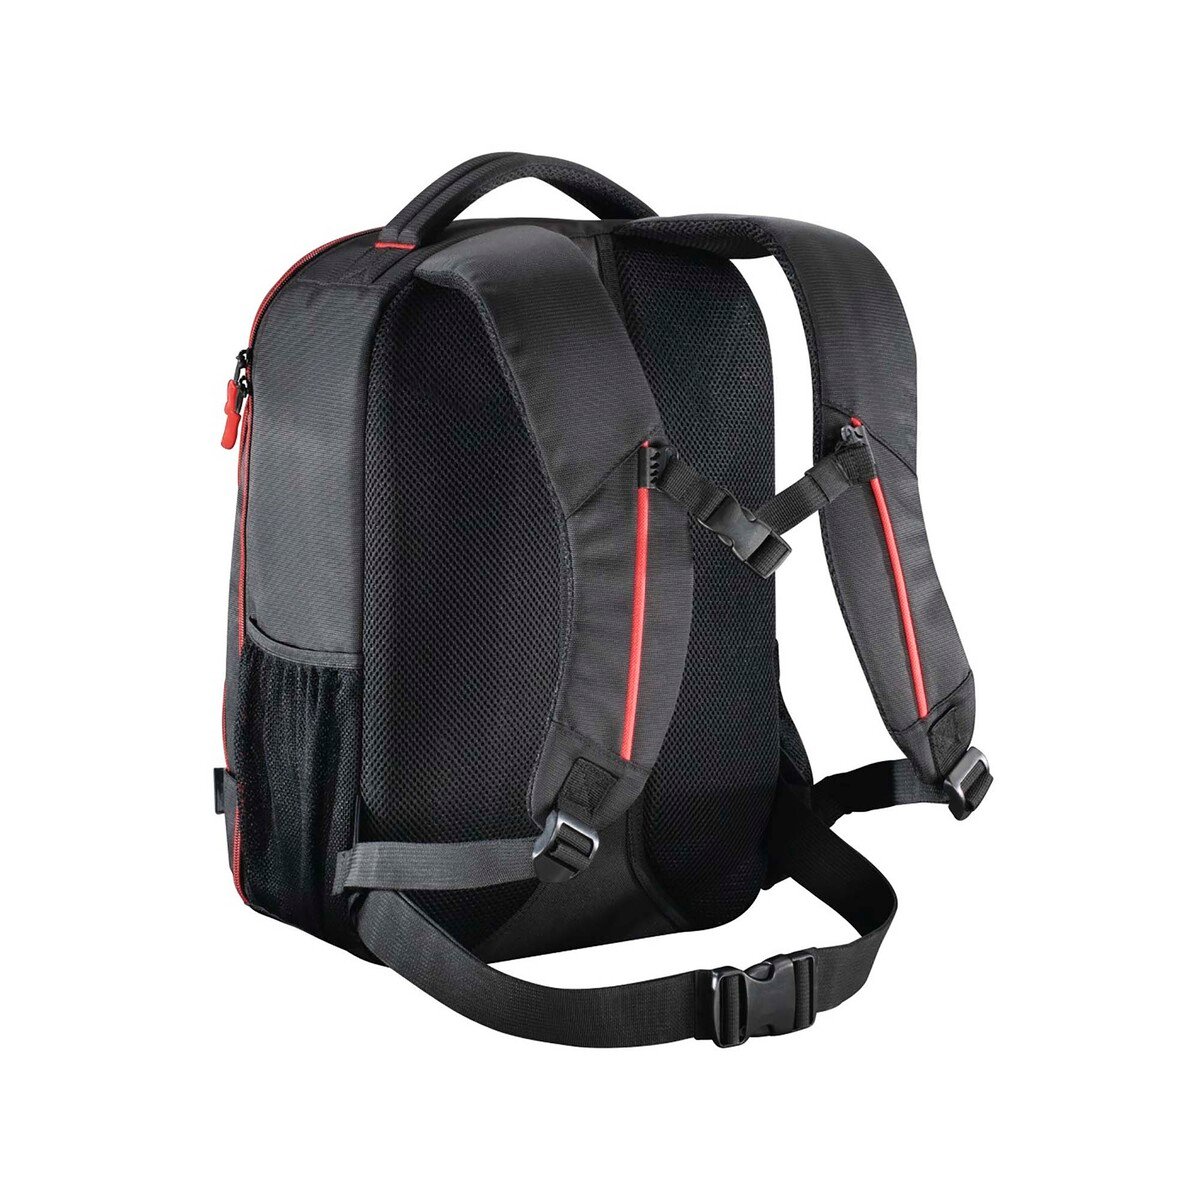 Hama Miami 139855 Camera Backpack, 190, Black/red